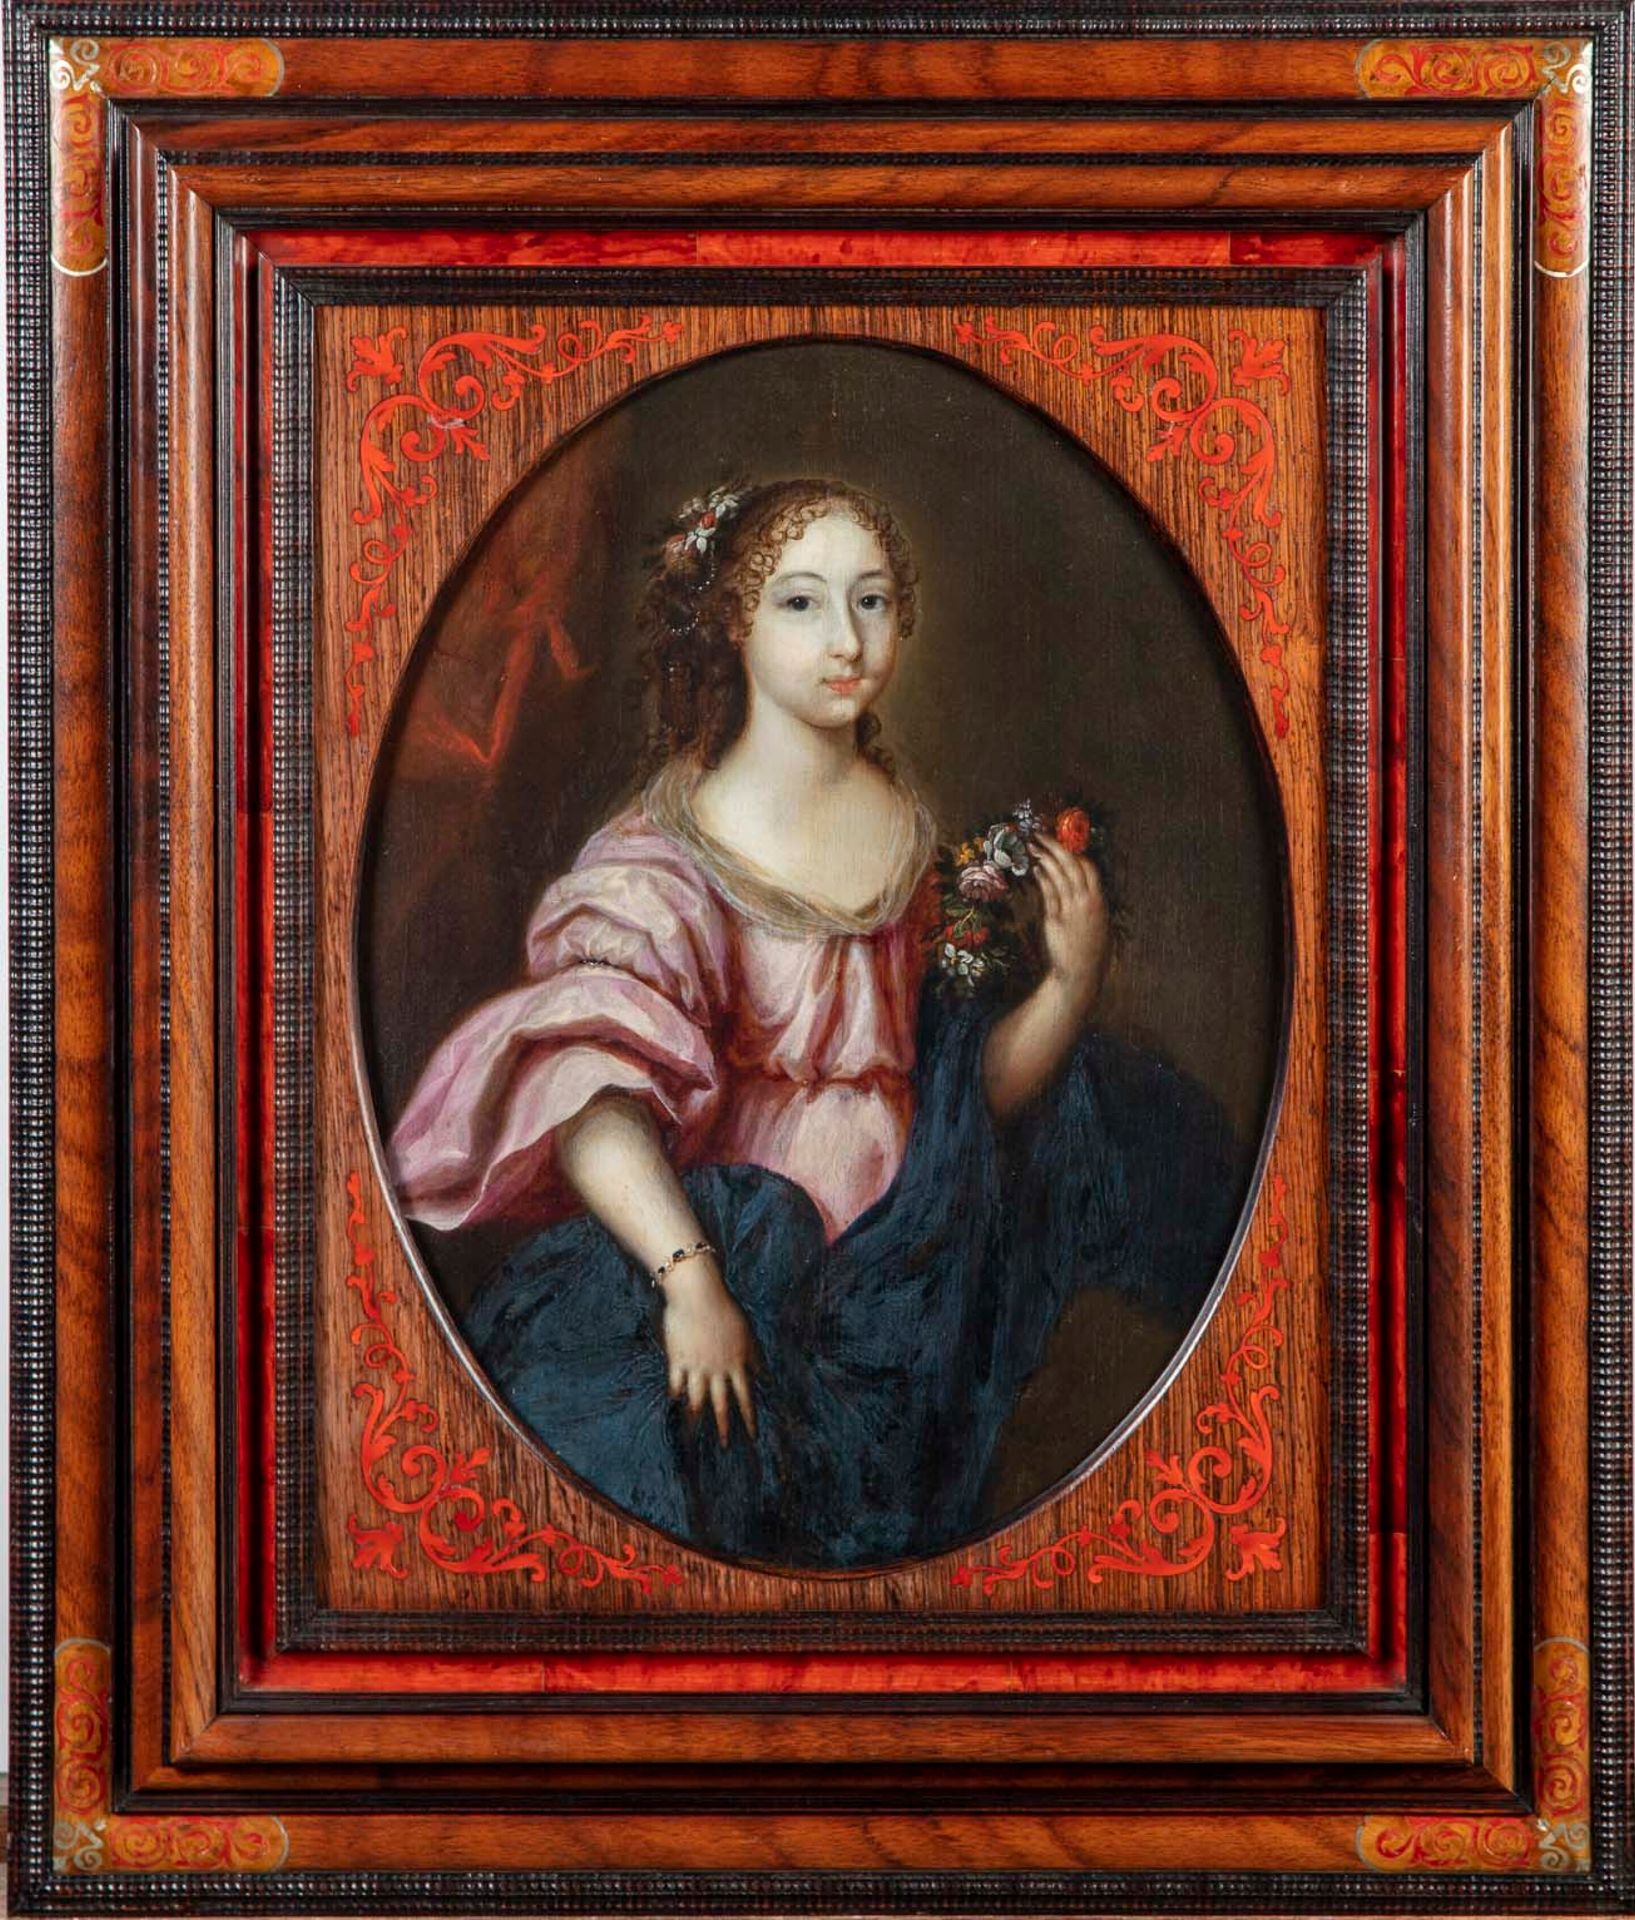 Ecole Flamande XVIIè 17th century FLEMISH SCHOOL

Portrait of a young woman hold&hellip;